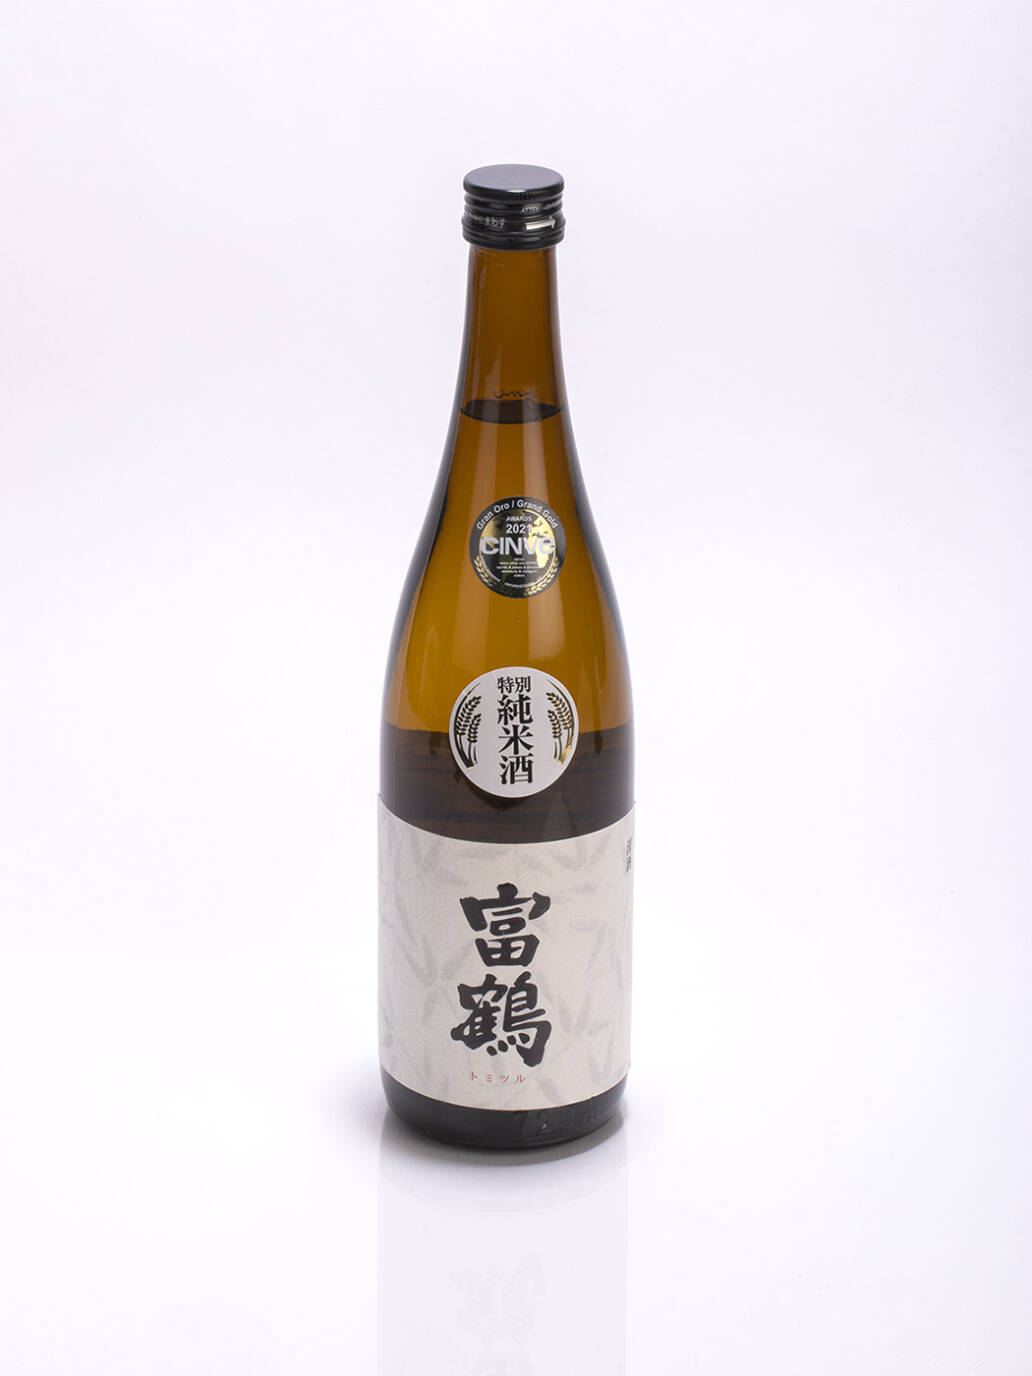 Le saké, un alcool fermenté  Les grands sakés d'Hiroshima